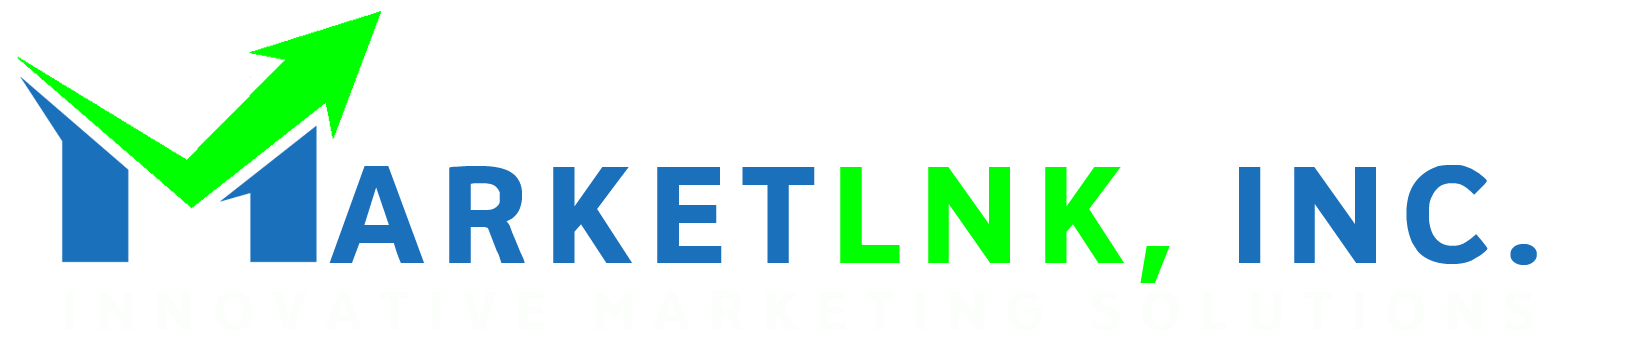 MarketLnk logo